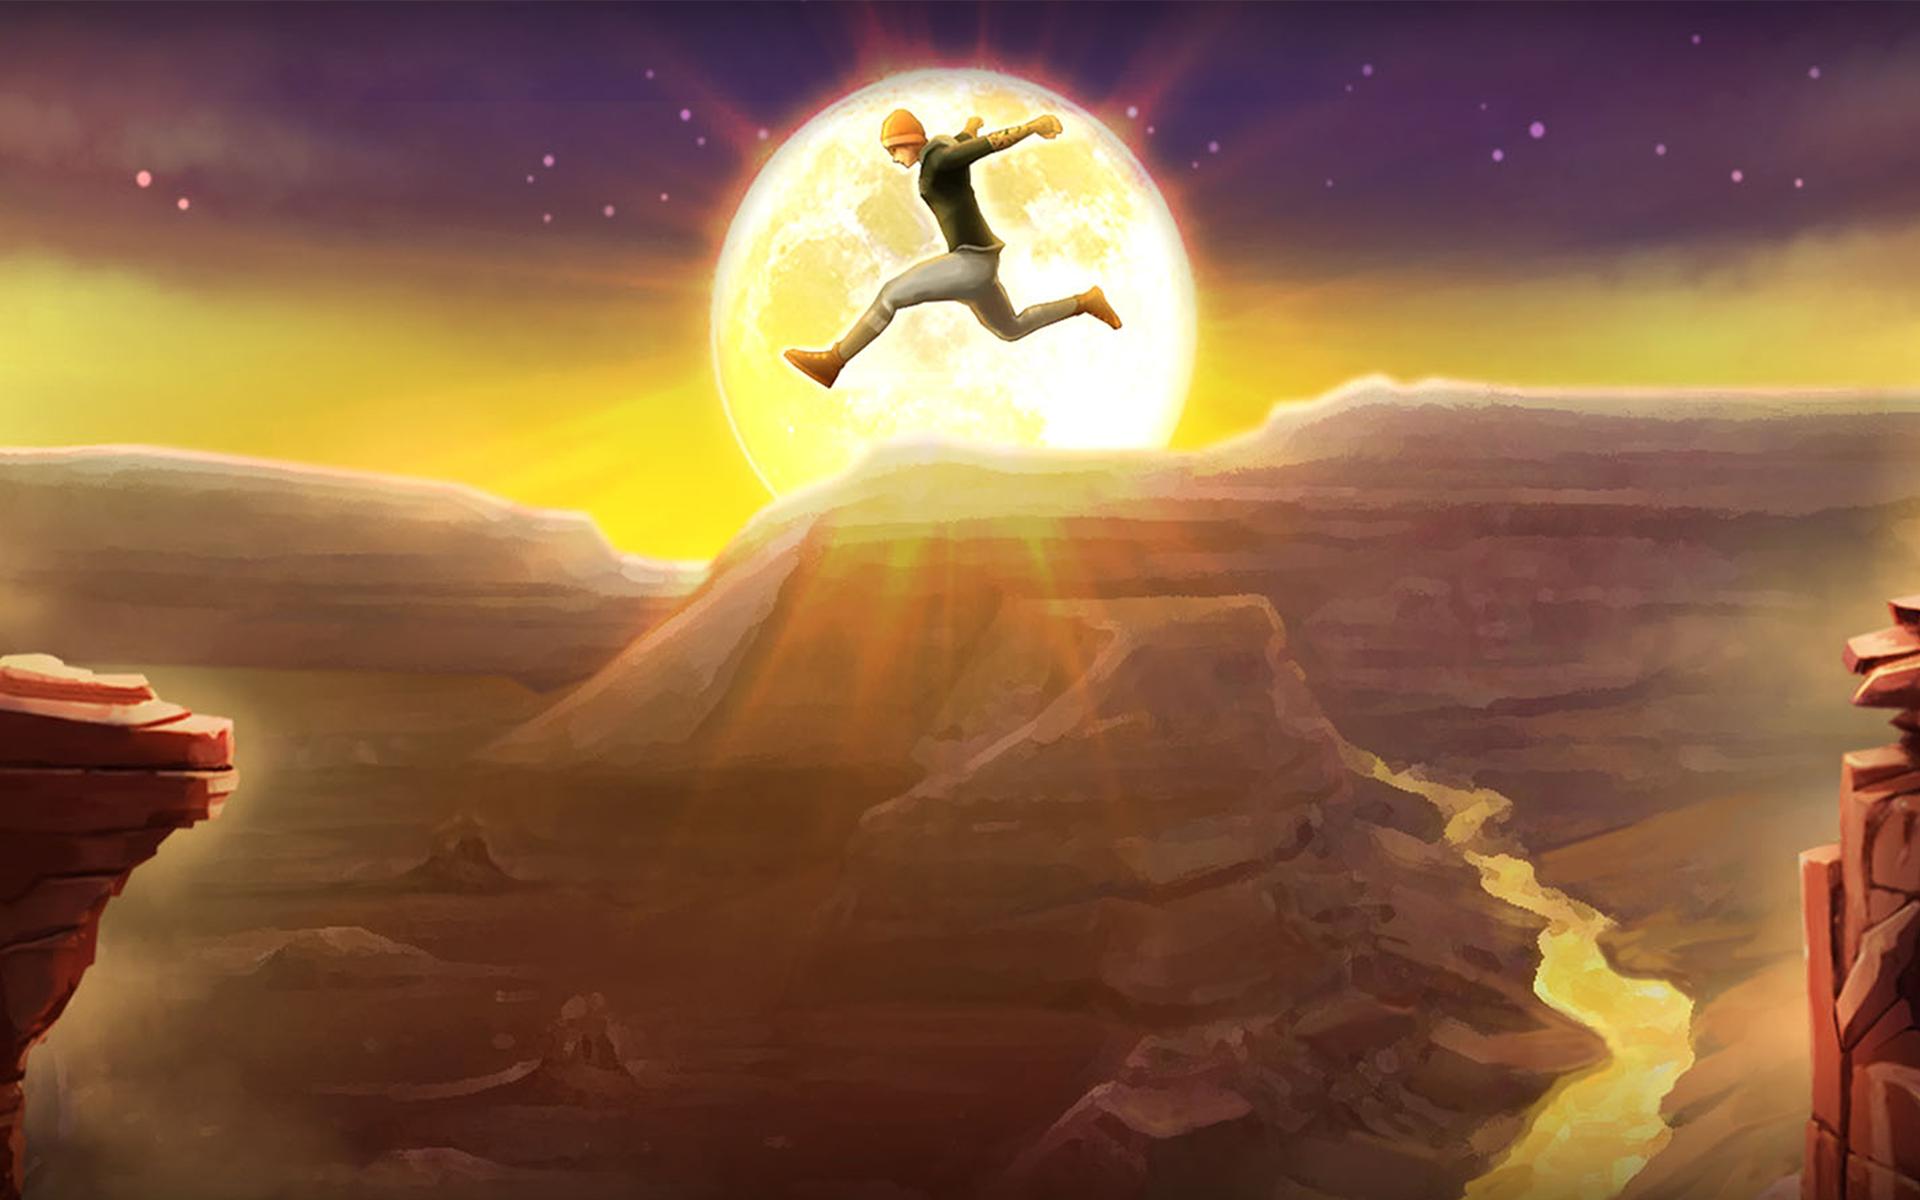 Sky Dancer Run - Running Game 4.2.0 Screenshot 19